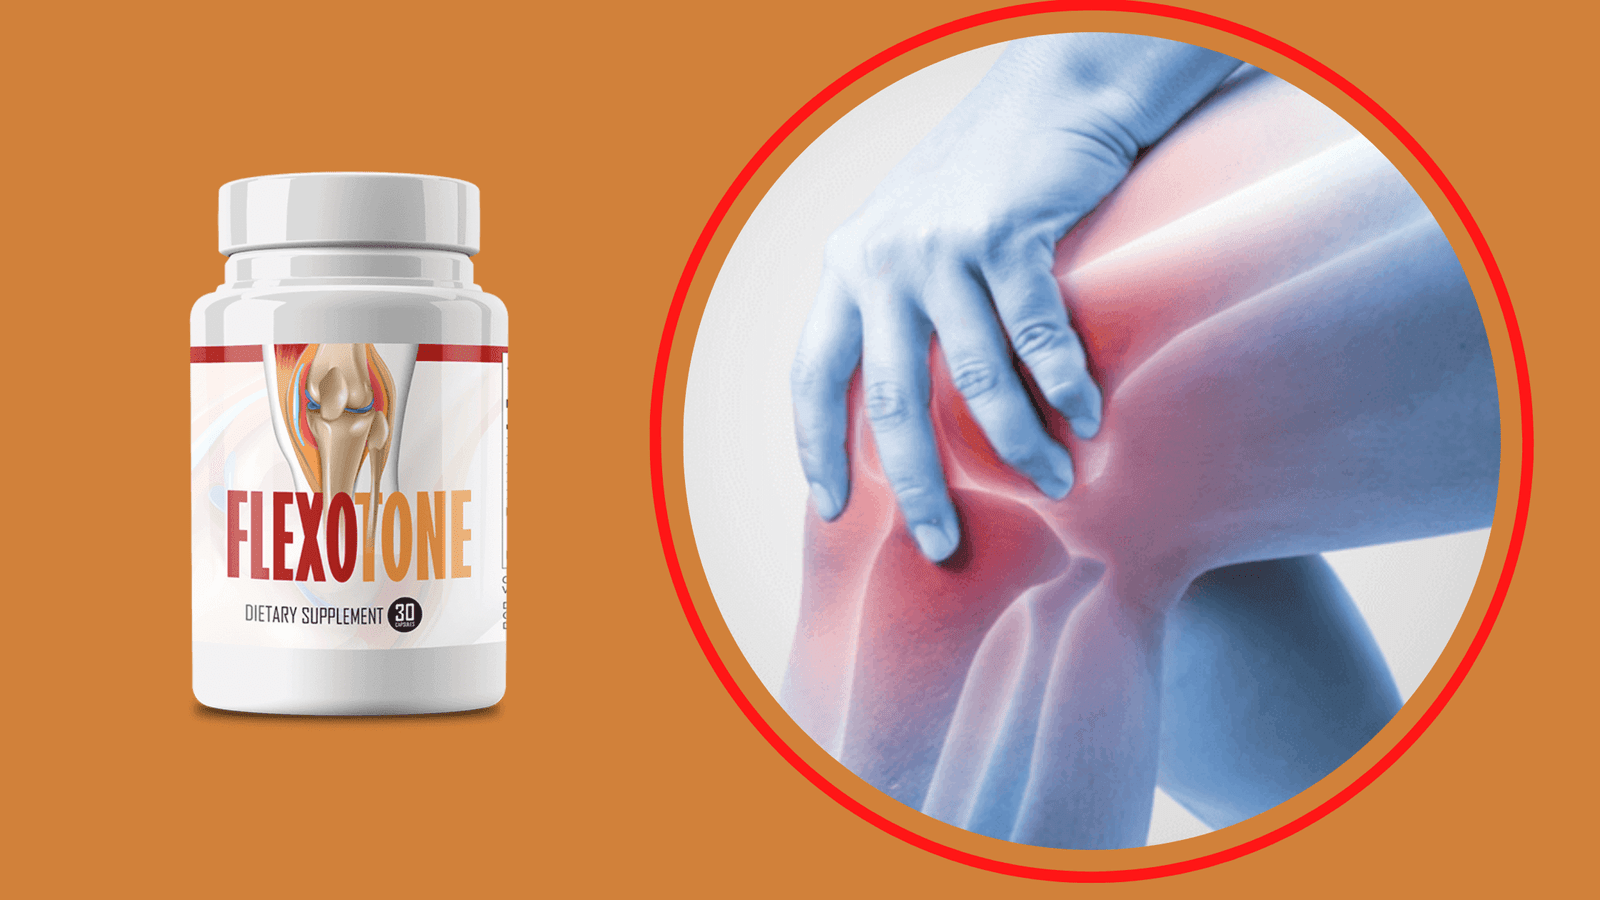 Flexotone joint pain reliever